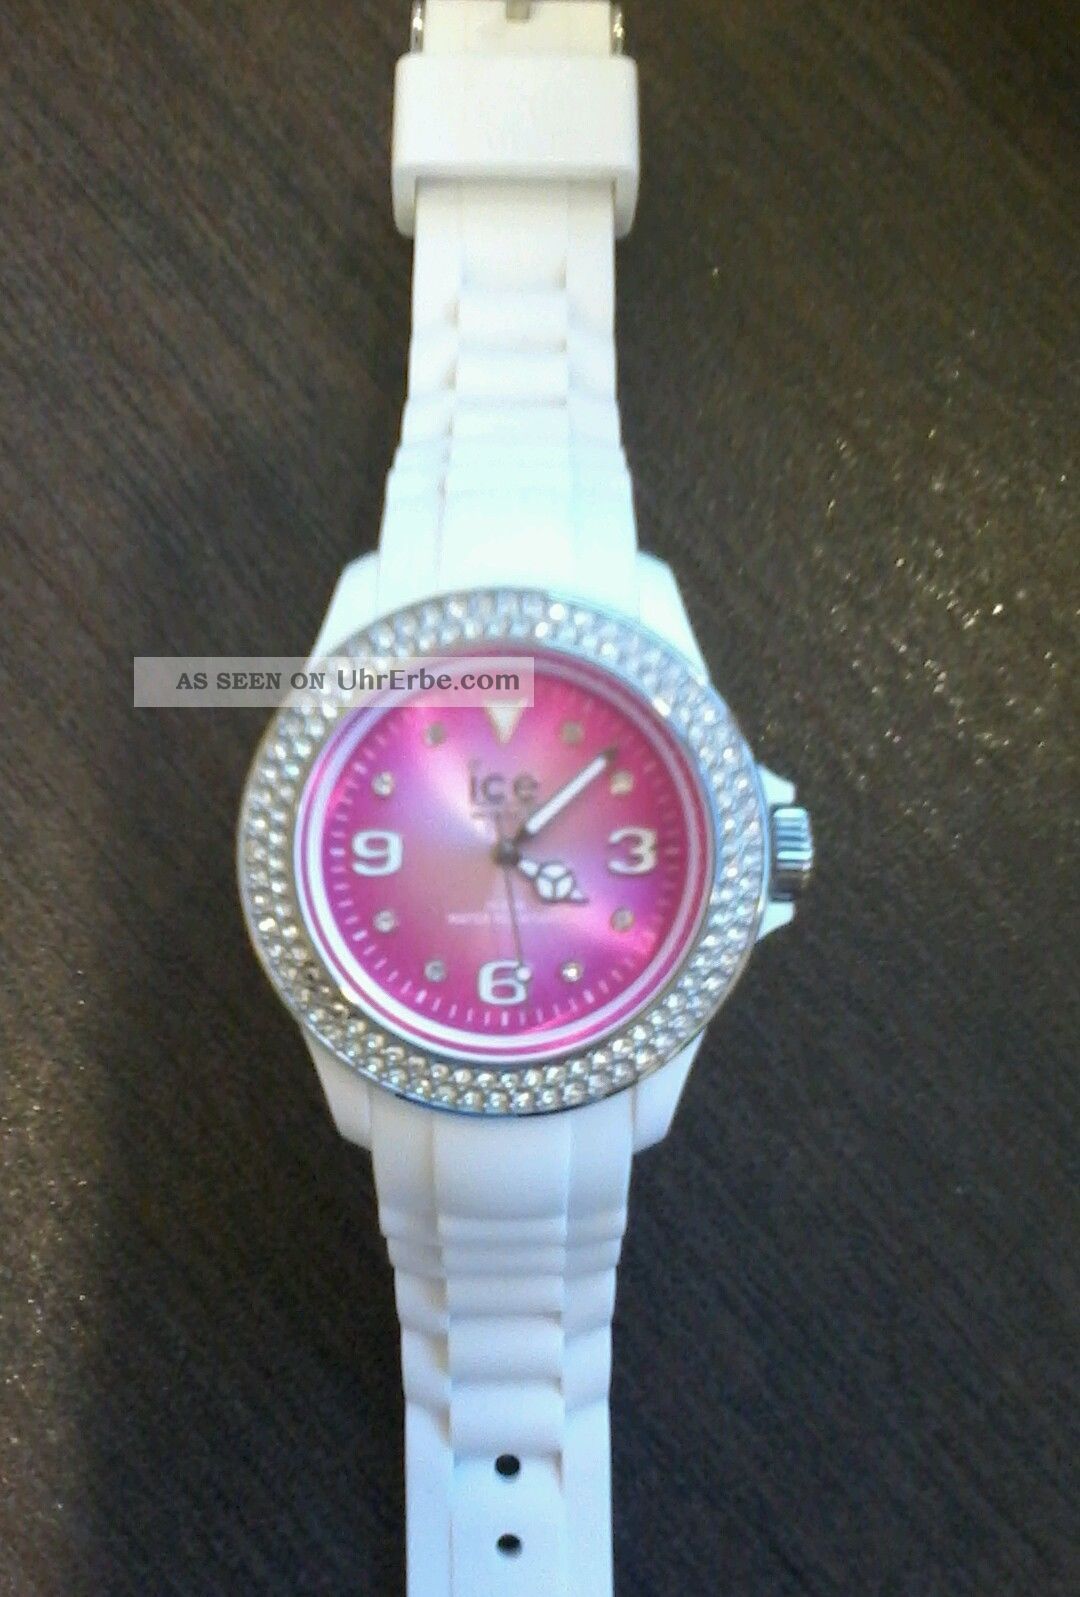 Ice Watch Uhr Armbanduhren Bild